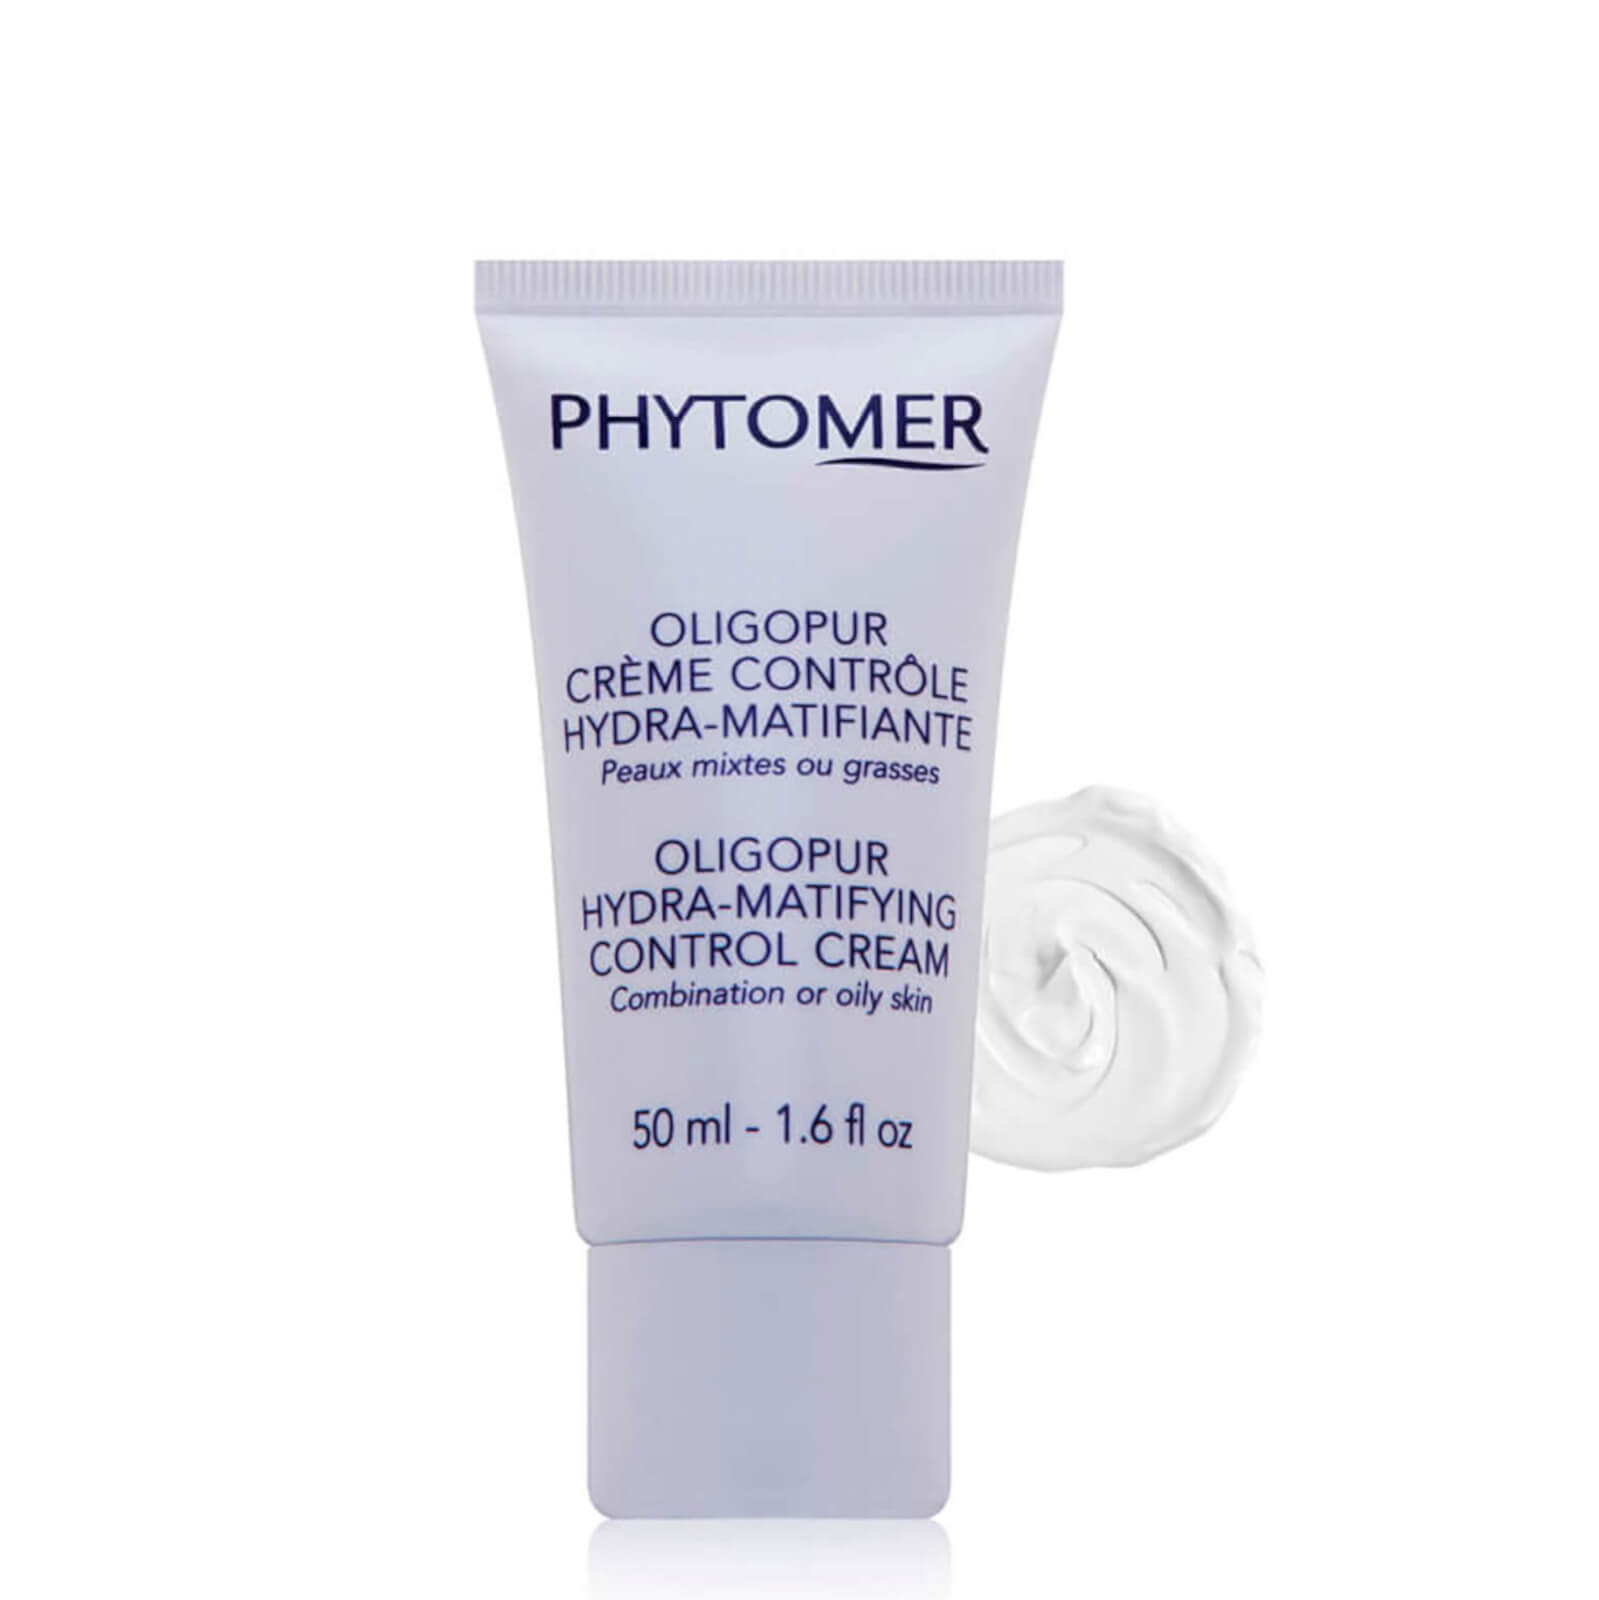 Crema OligoPur Hydra-Matifying Control de Phytomer (50 ml)